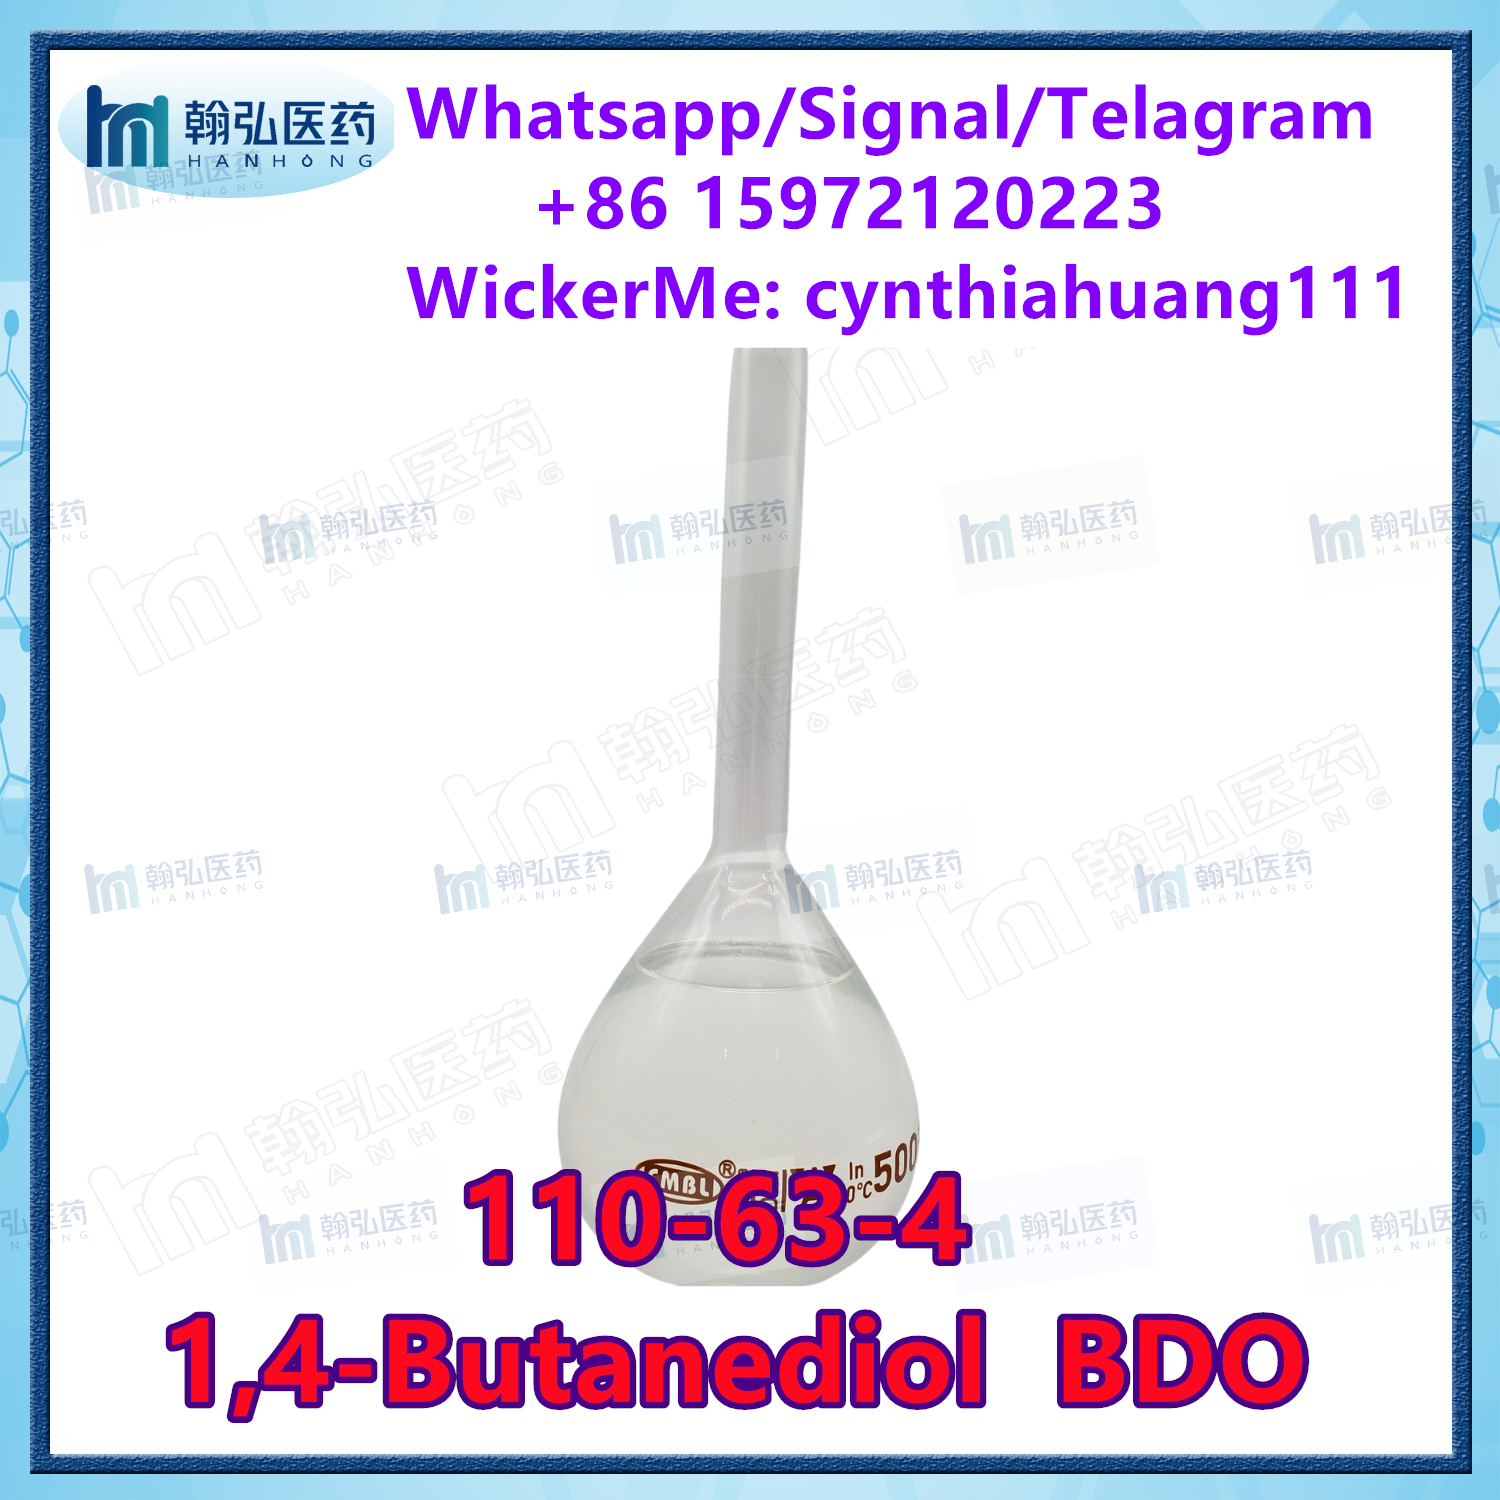 BDO 1,4-Butanediol CAS 110-63-4 Whatsapp/Signal/ Telegram:+ 86 15972120223 Wicker: Cynthiahuang111 